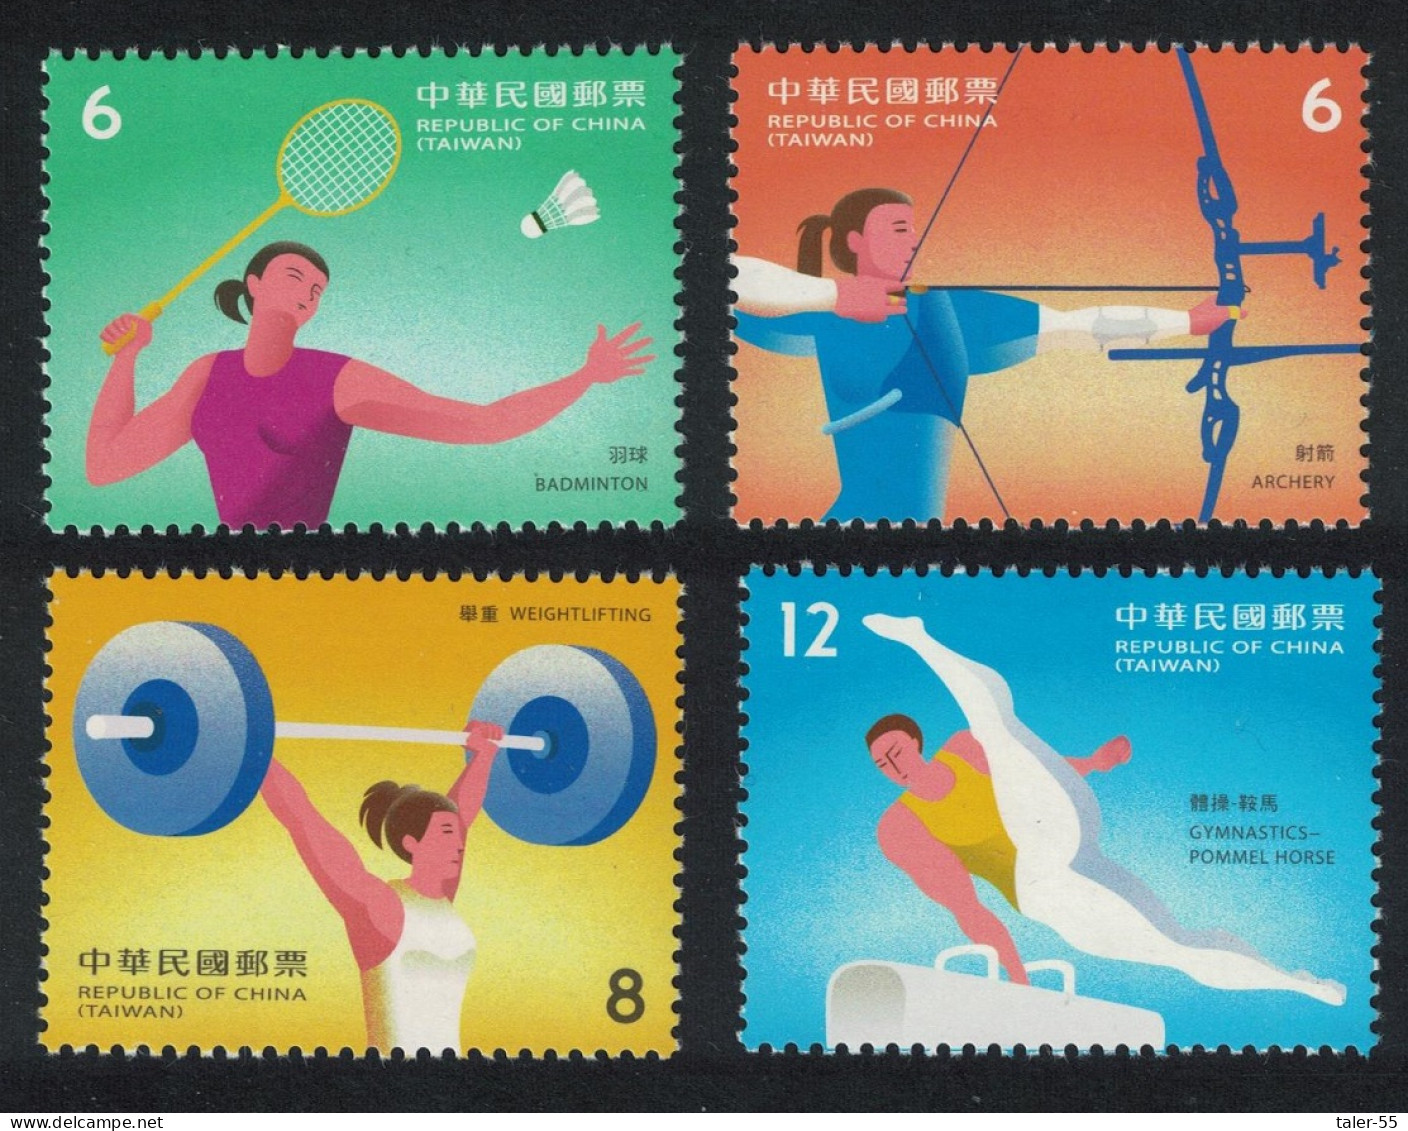 Taiwan Badminton Archery Weightlifting Sports 4v 2020 MNH - Ongebruikt